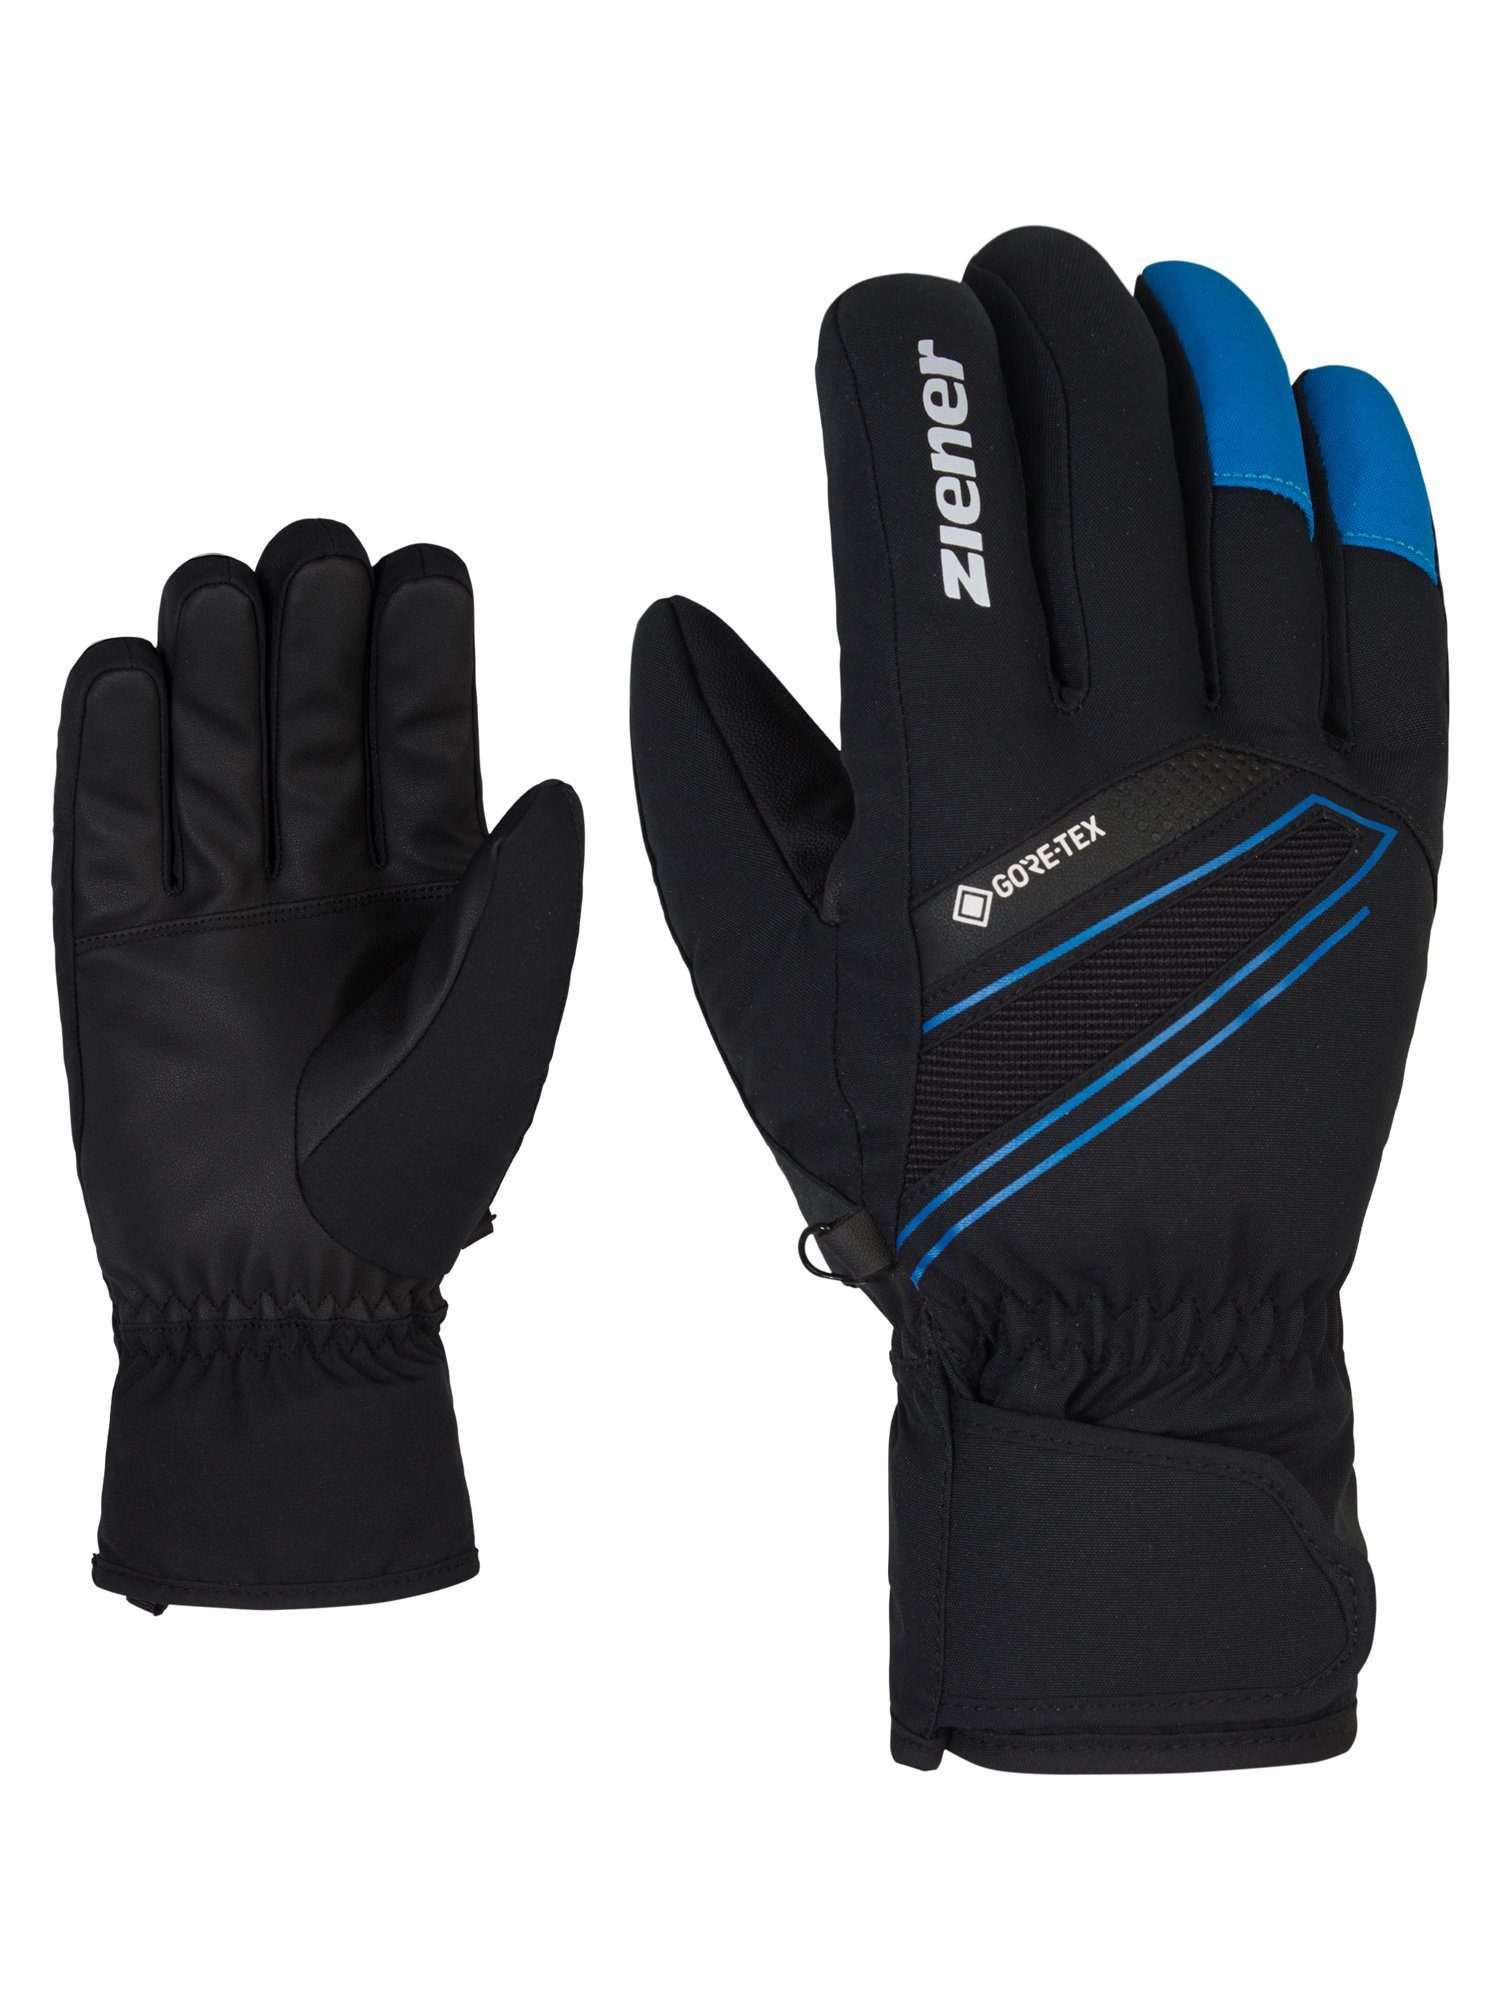 Ziener Skihandschuhe GUNAR GTX unifarben mit Farbeinsätzen | Handschuhe